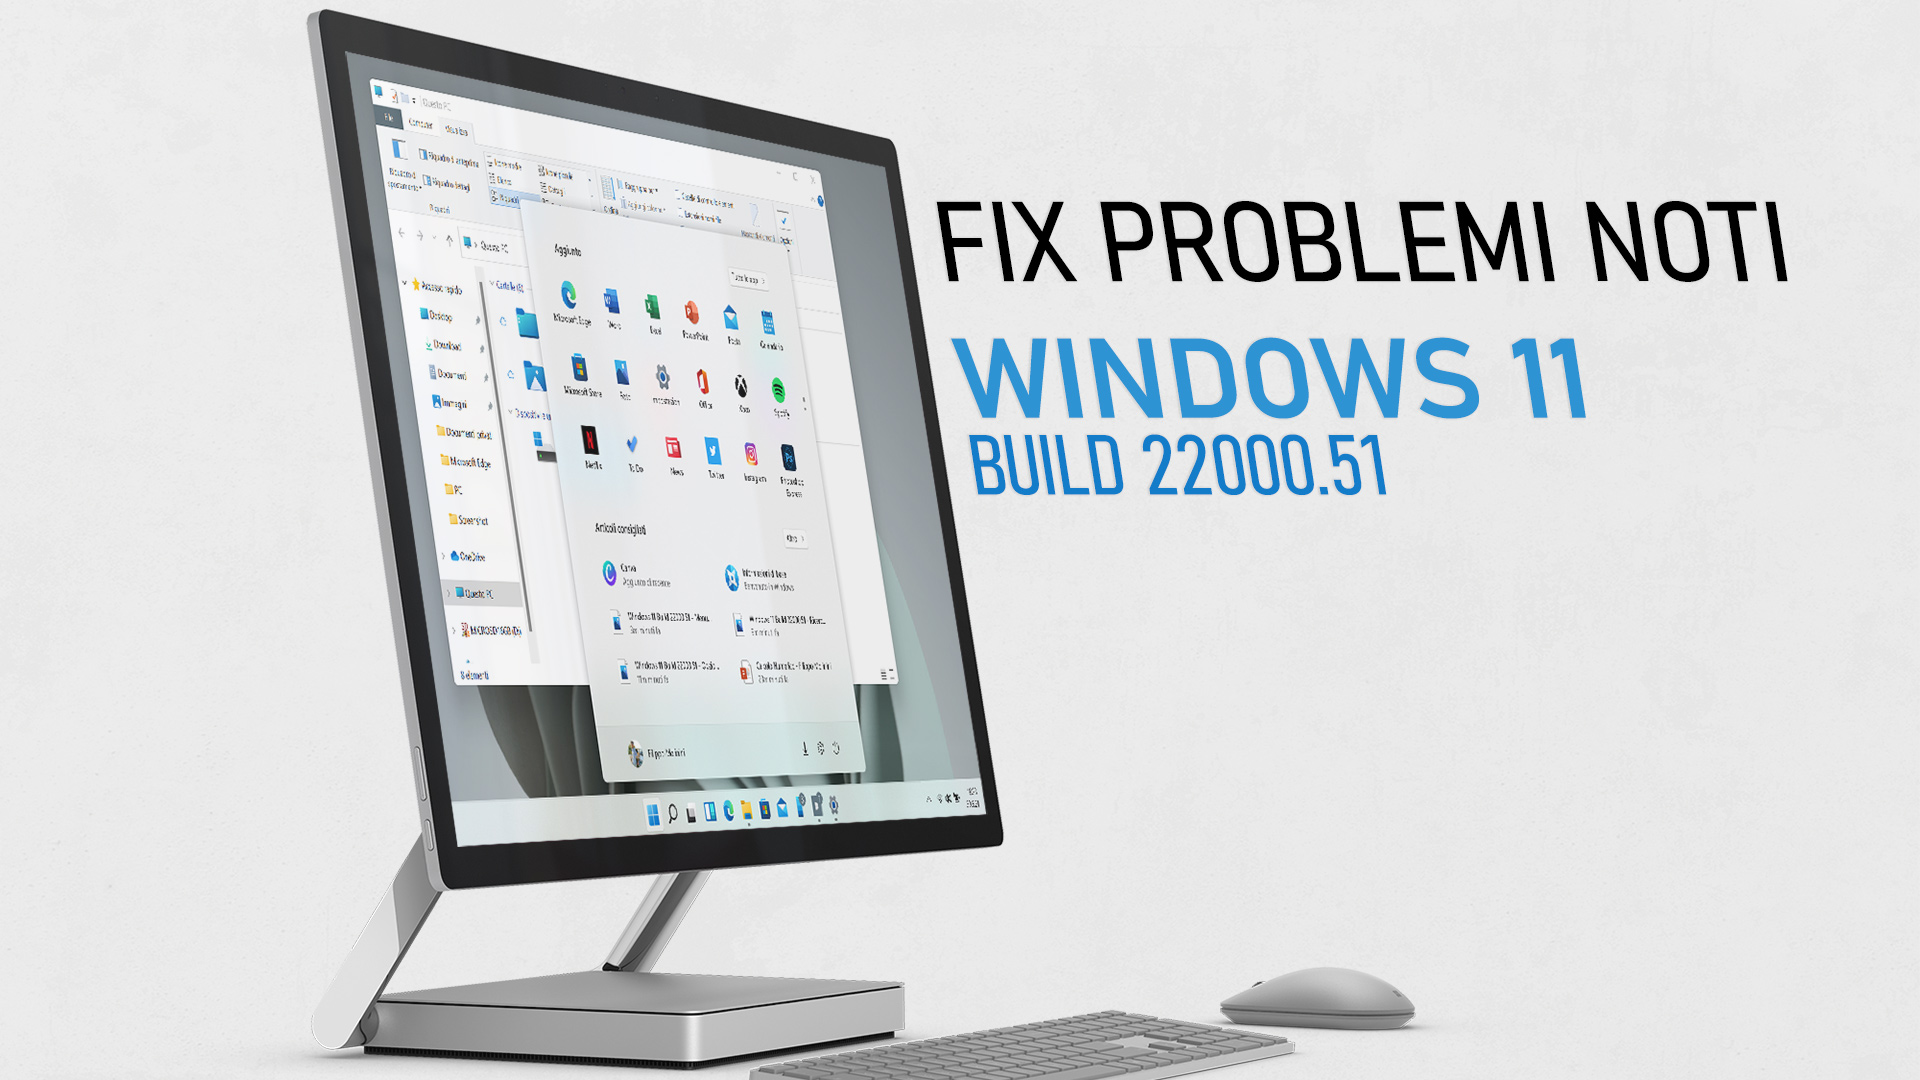 Windows 11 - Build 22000.51 - Fix per problemi noti